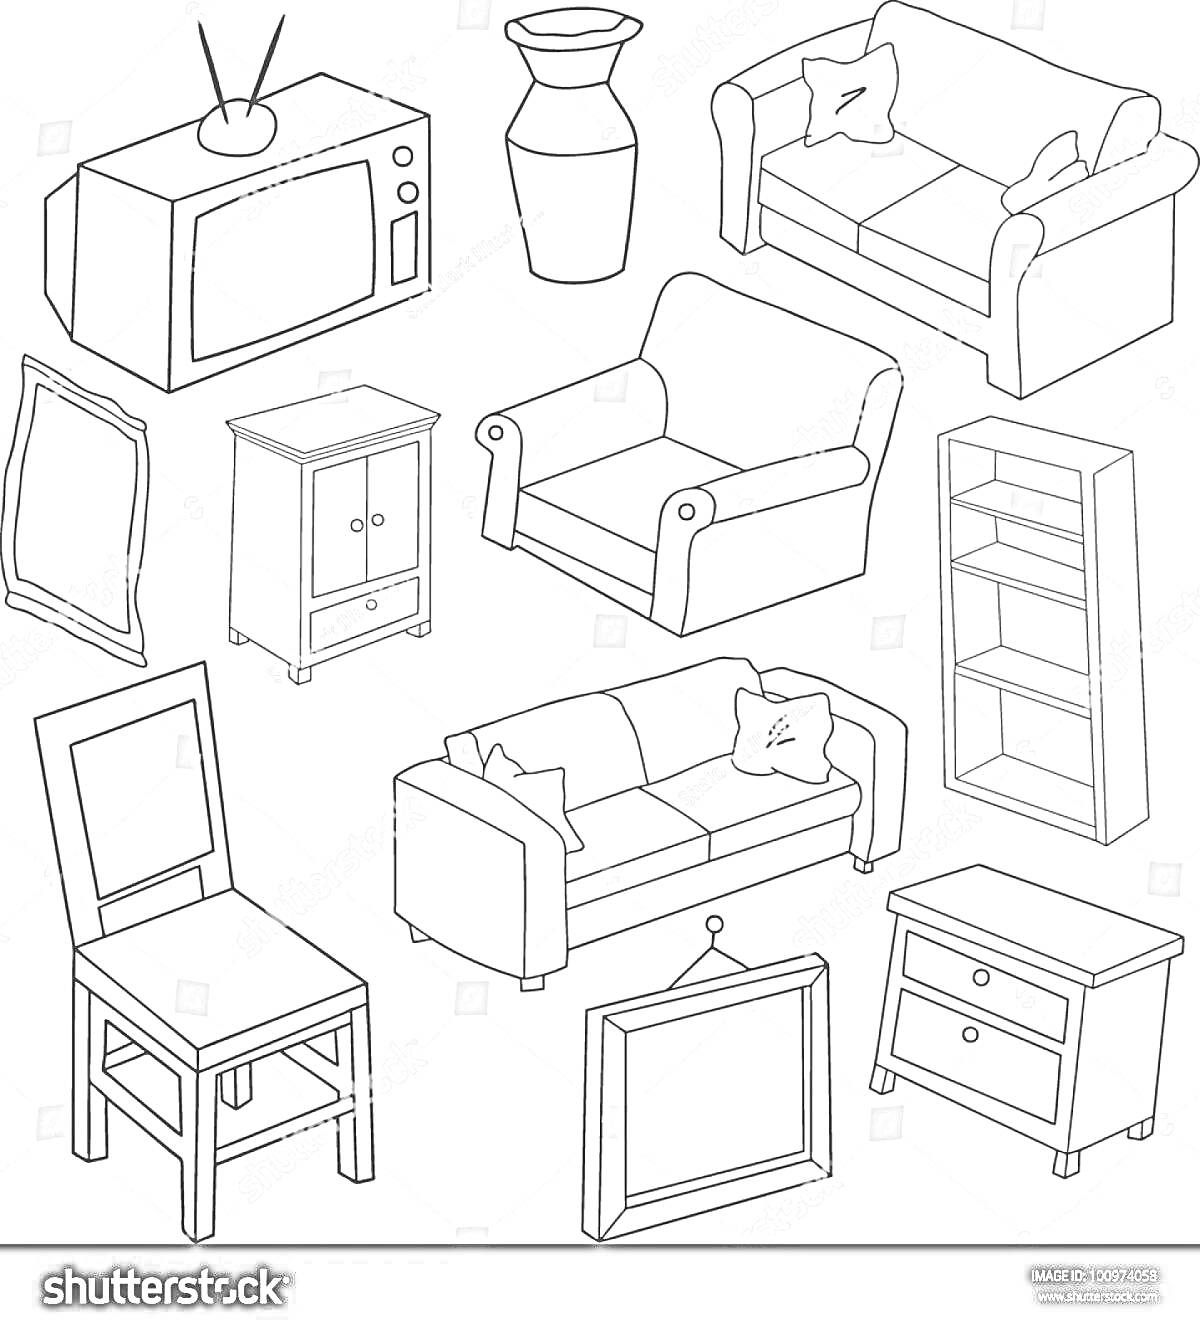 На раскраске изображено: Мебель, Диван, Кресло, Телевизор, Шкаф, Книжный шкаф, Стул, Ваза